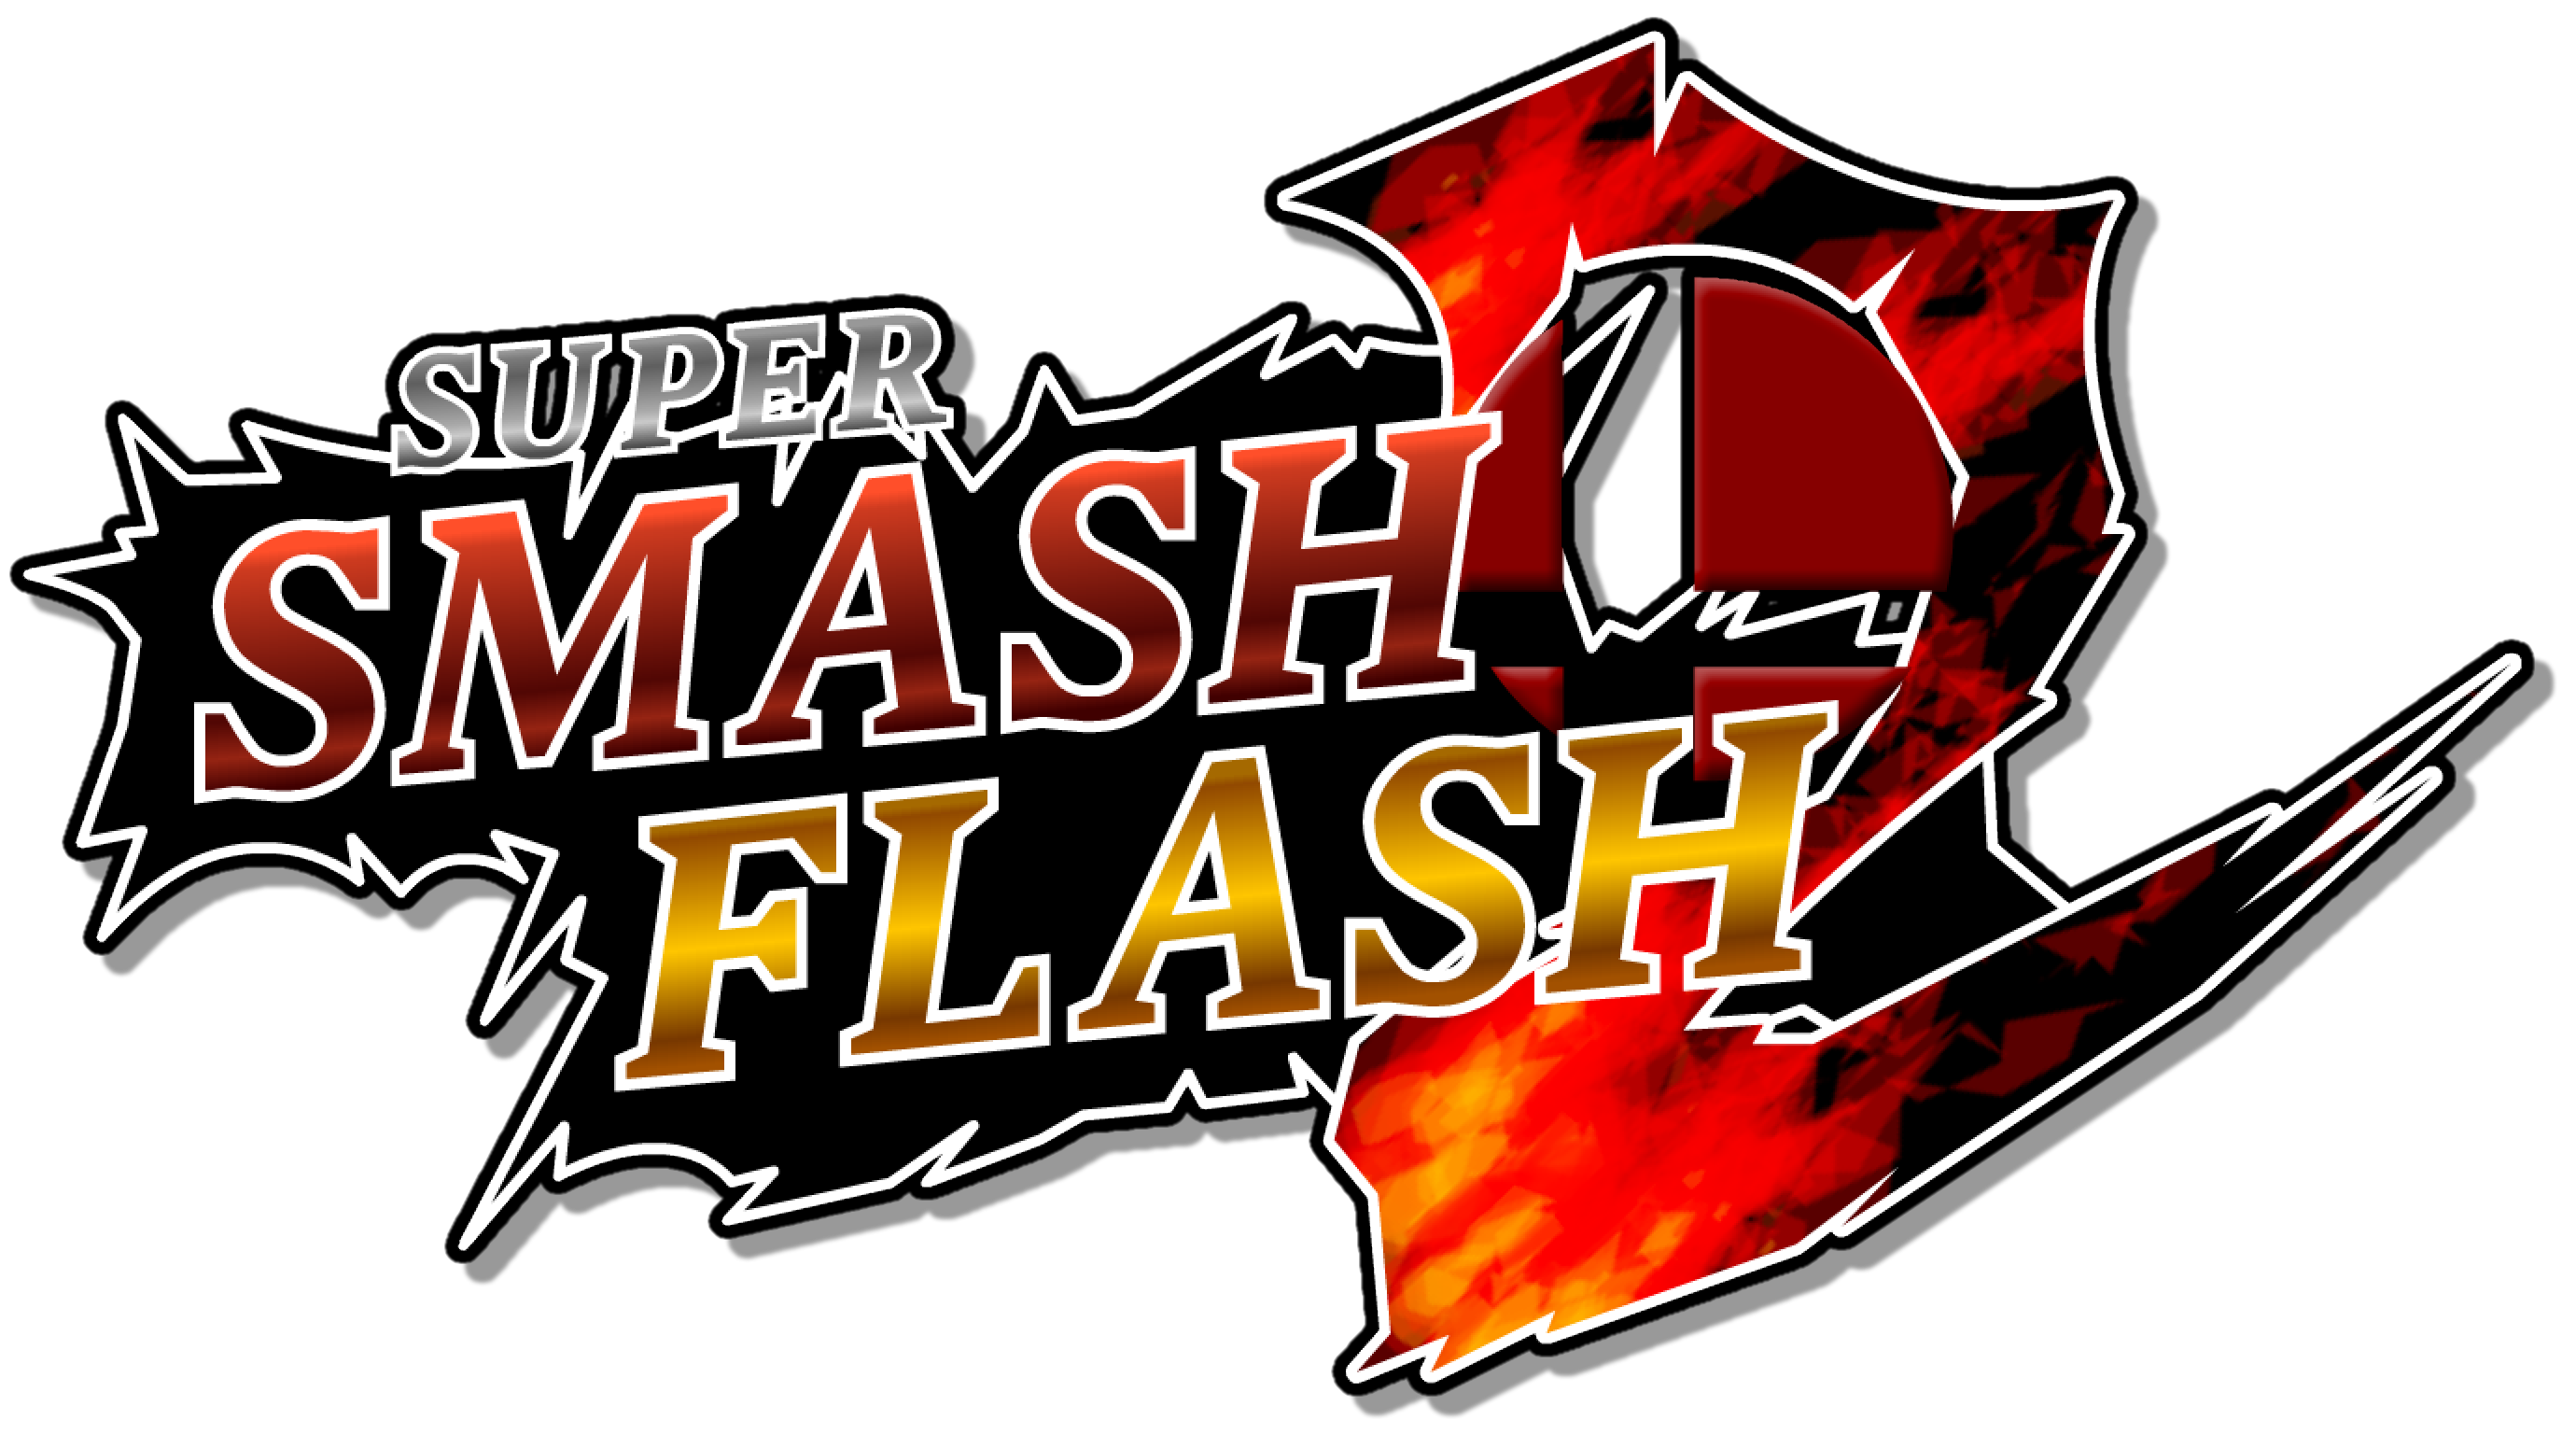 super smash flash 2 beta play game